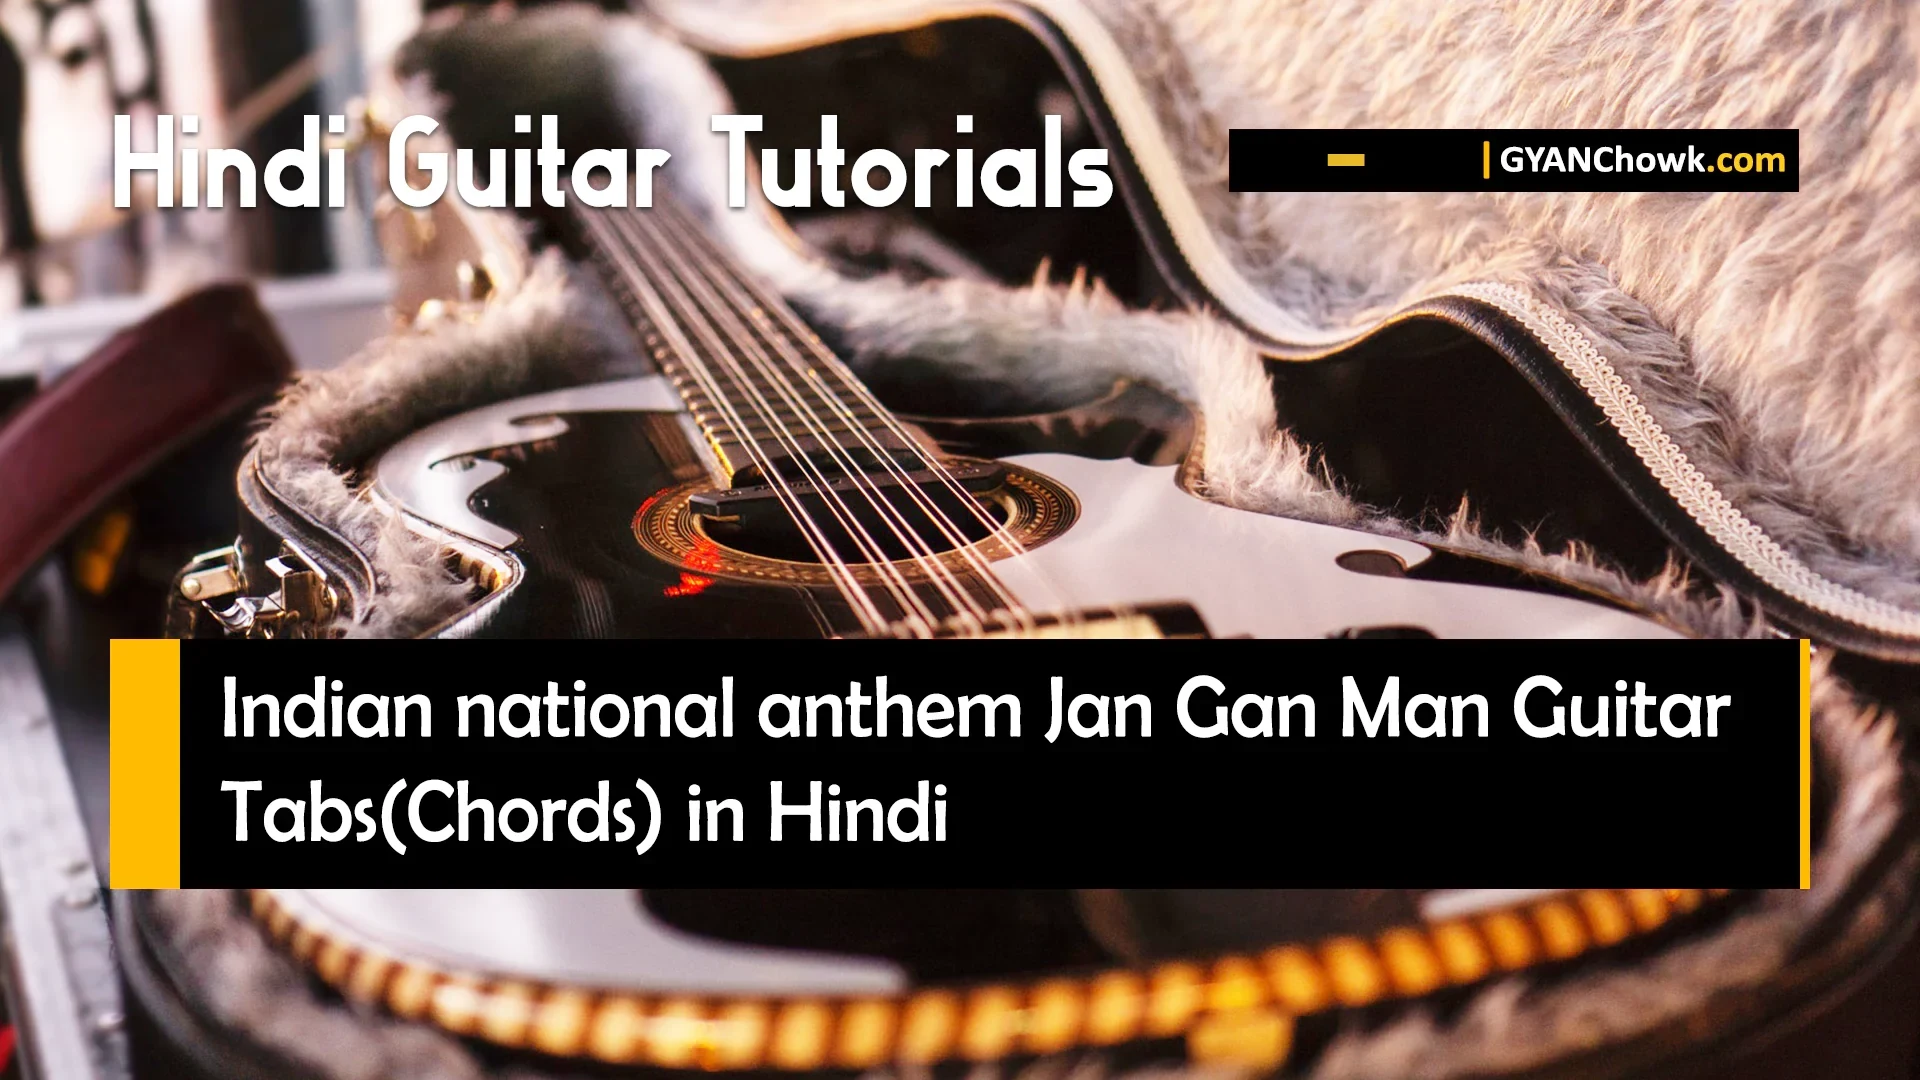 Jan Gan Man Guitar Tabs and Chords